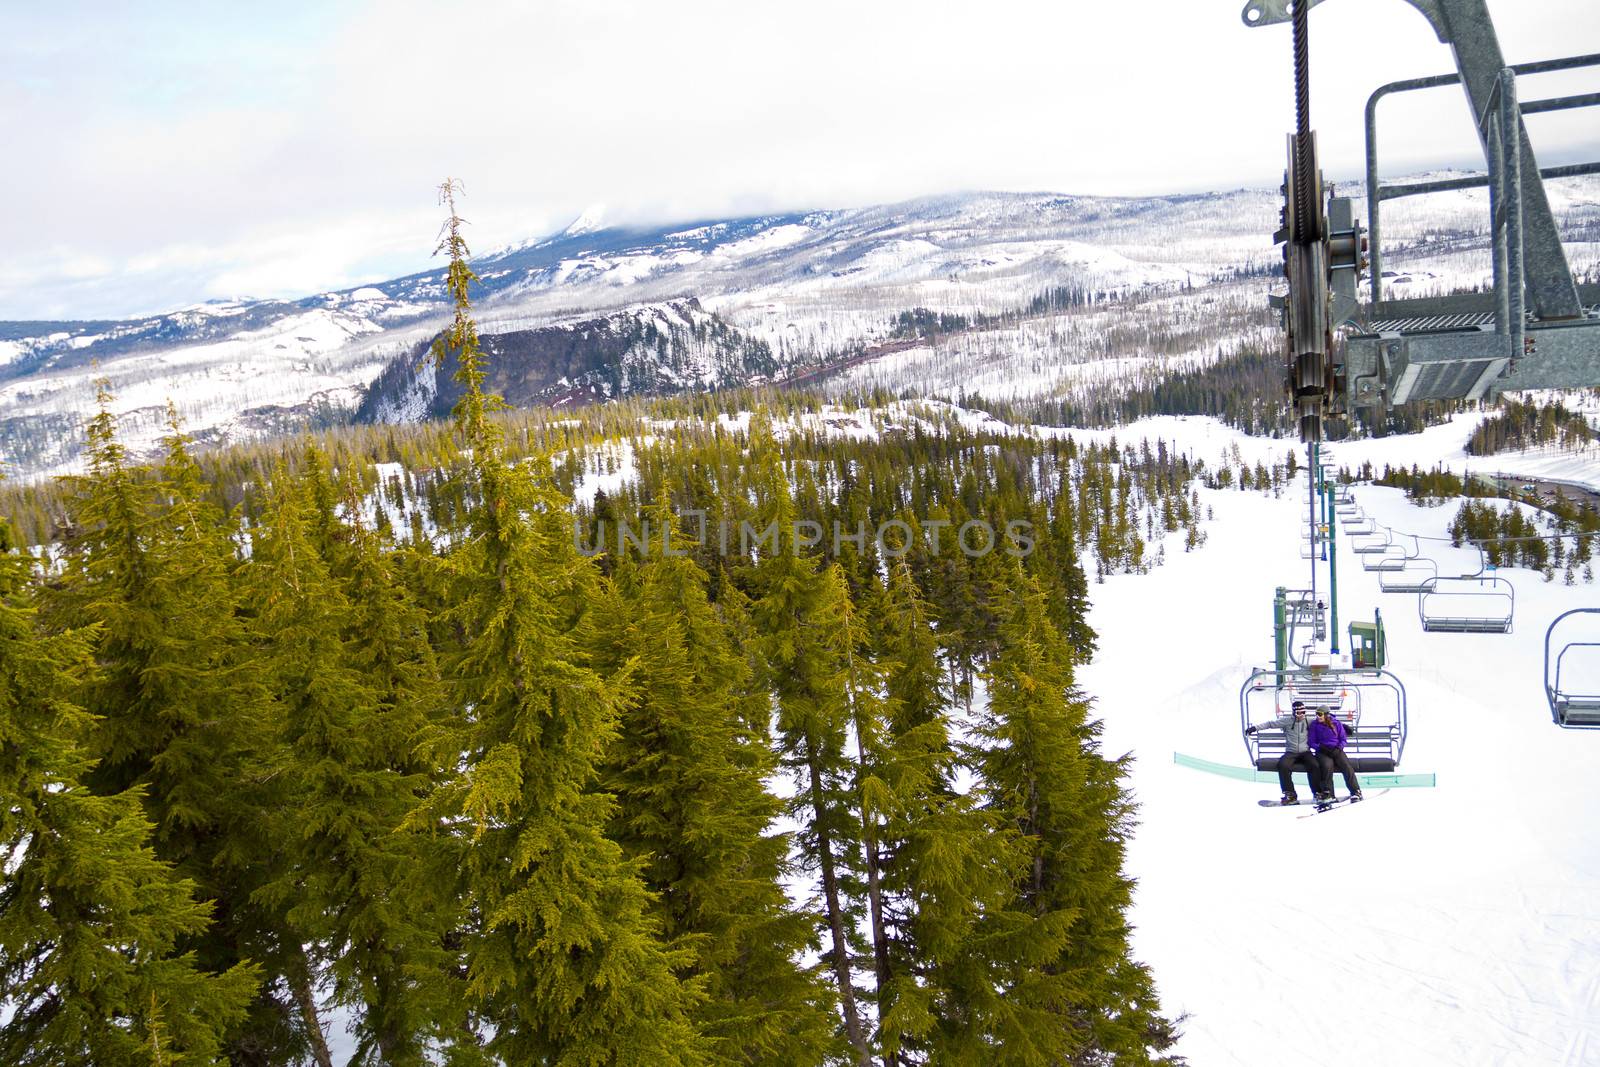 Couple on Ski Lift by joshuaraineyphotography